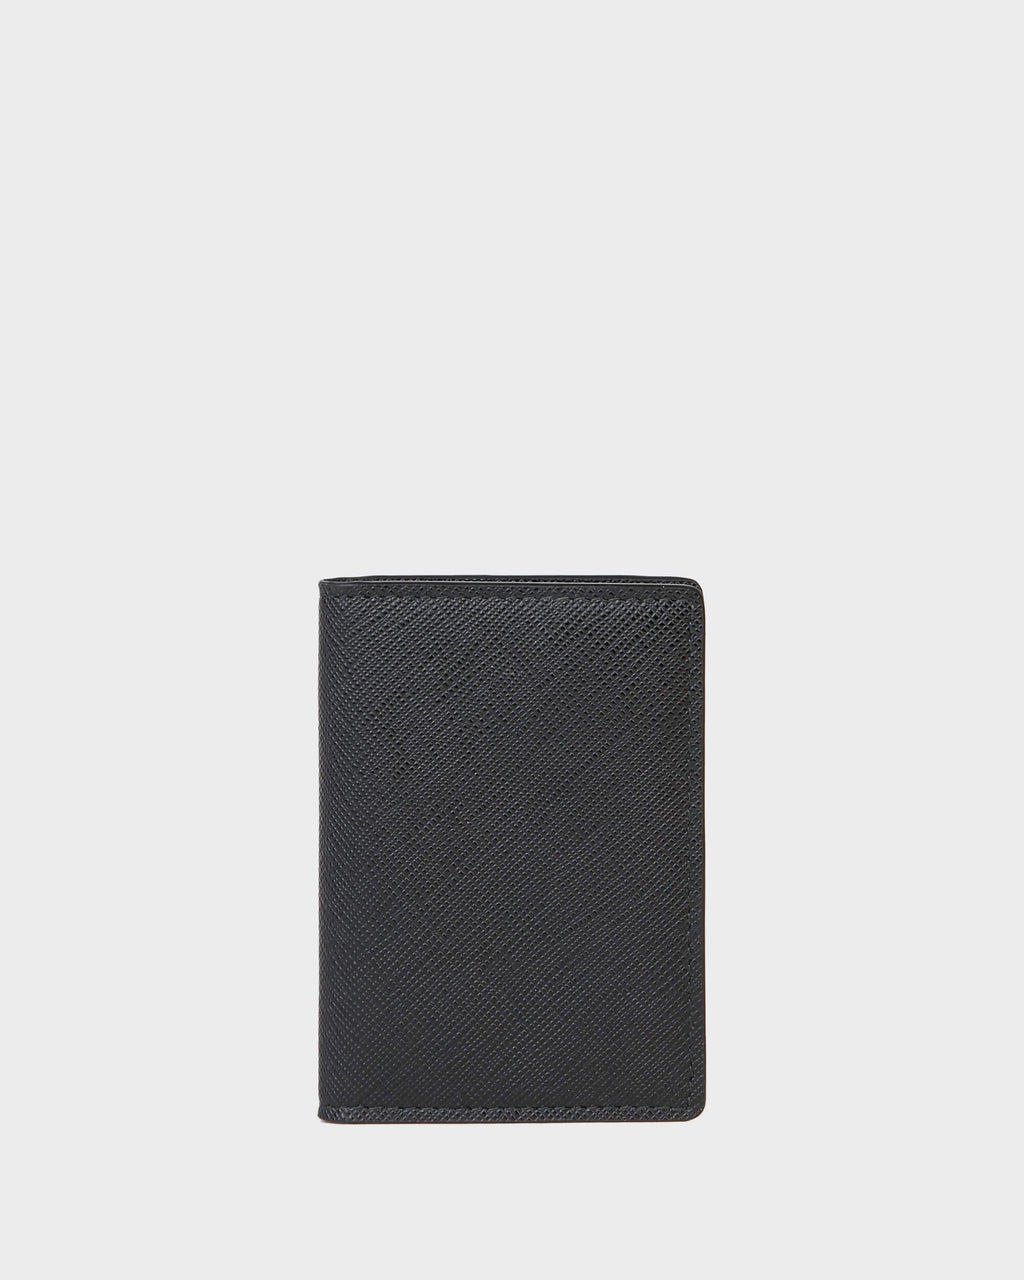 PRADA MILANO Saffiano Leather Passport Holder Cover Italy Black